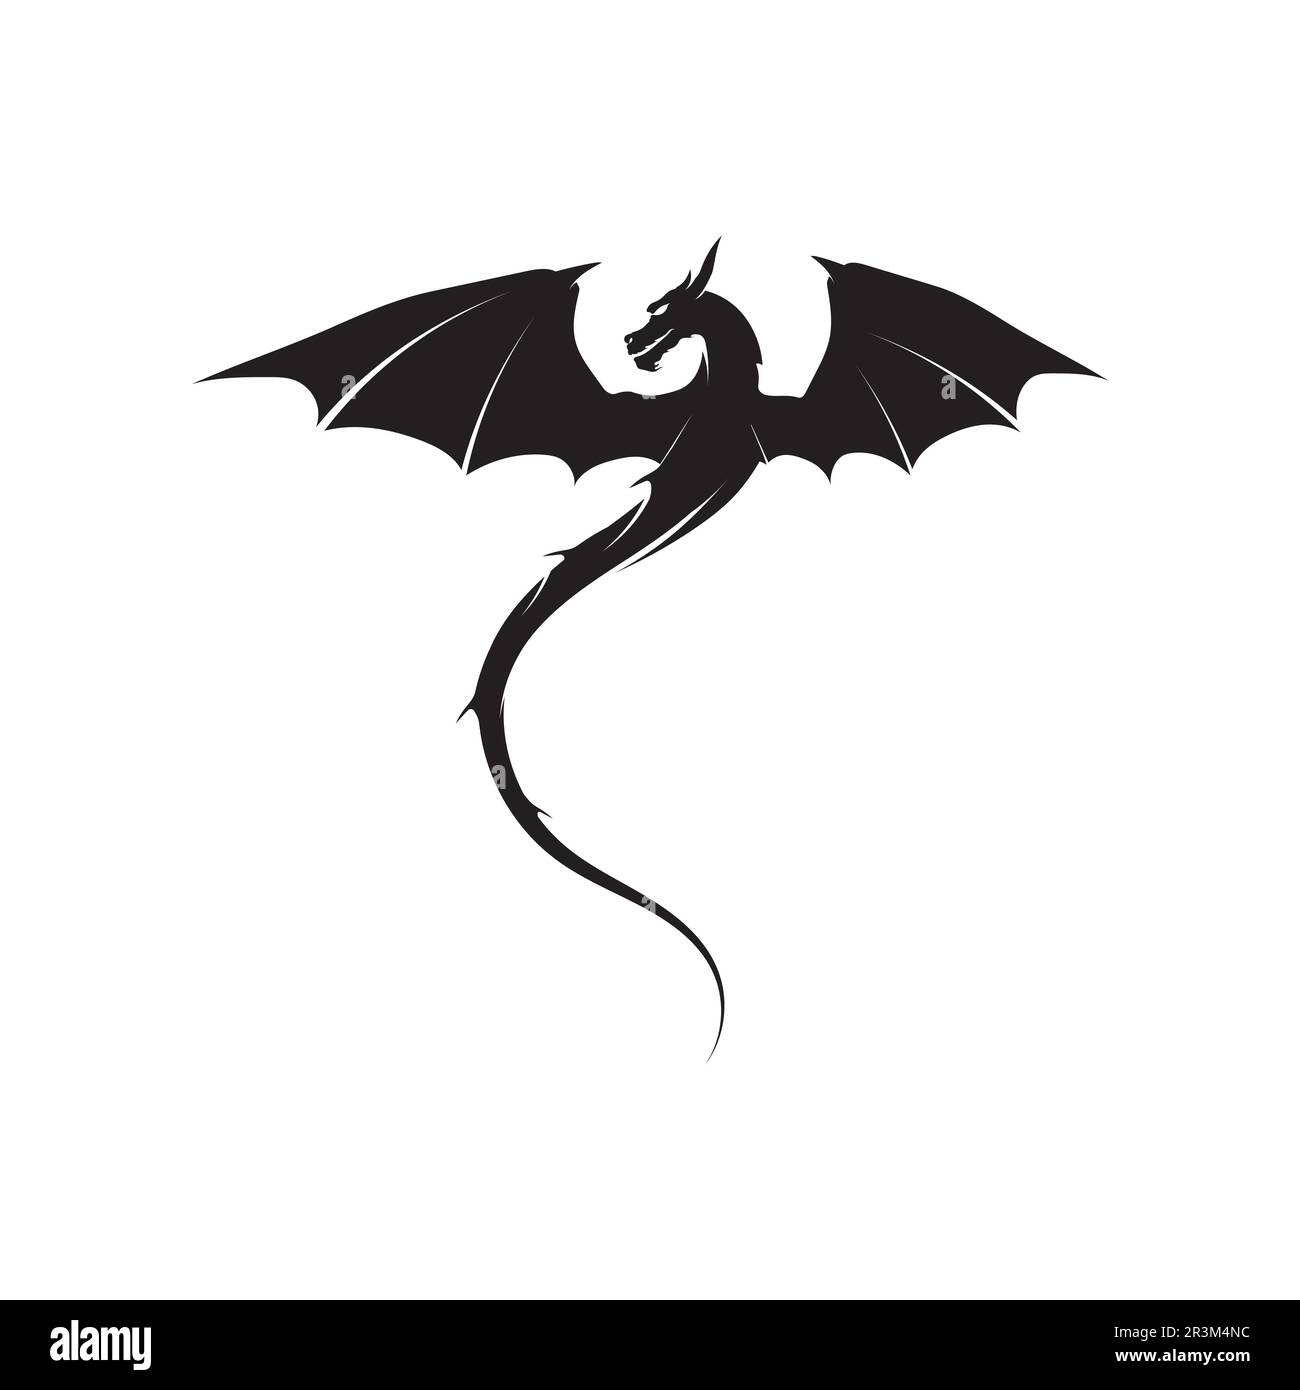 Dragon vector icon illustration design logo template Stock Vector